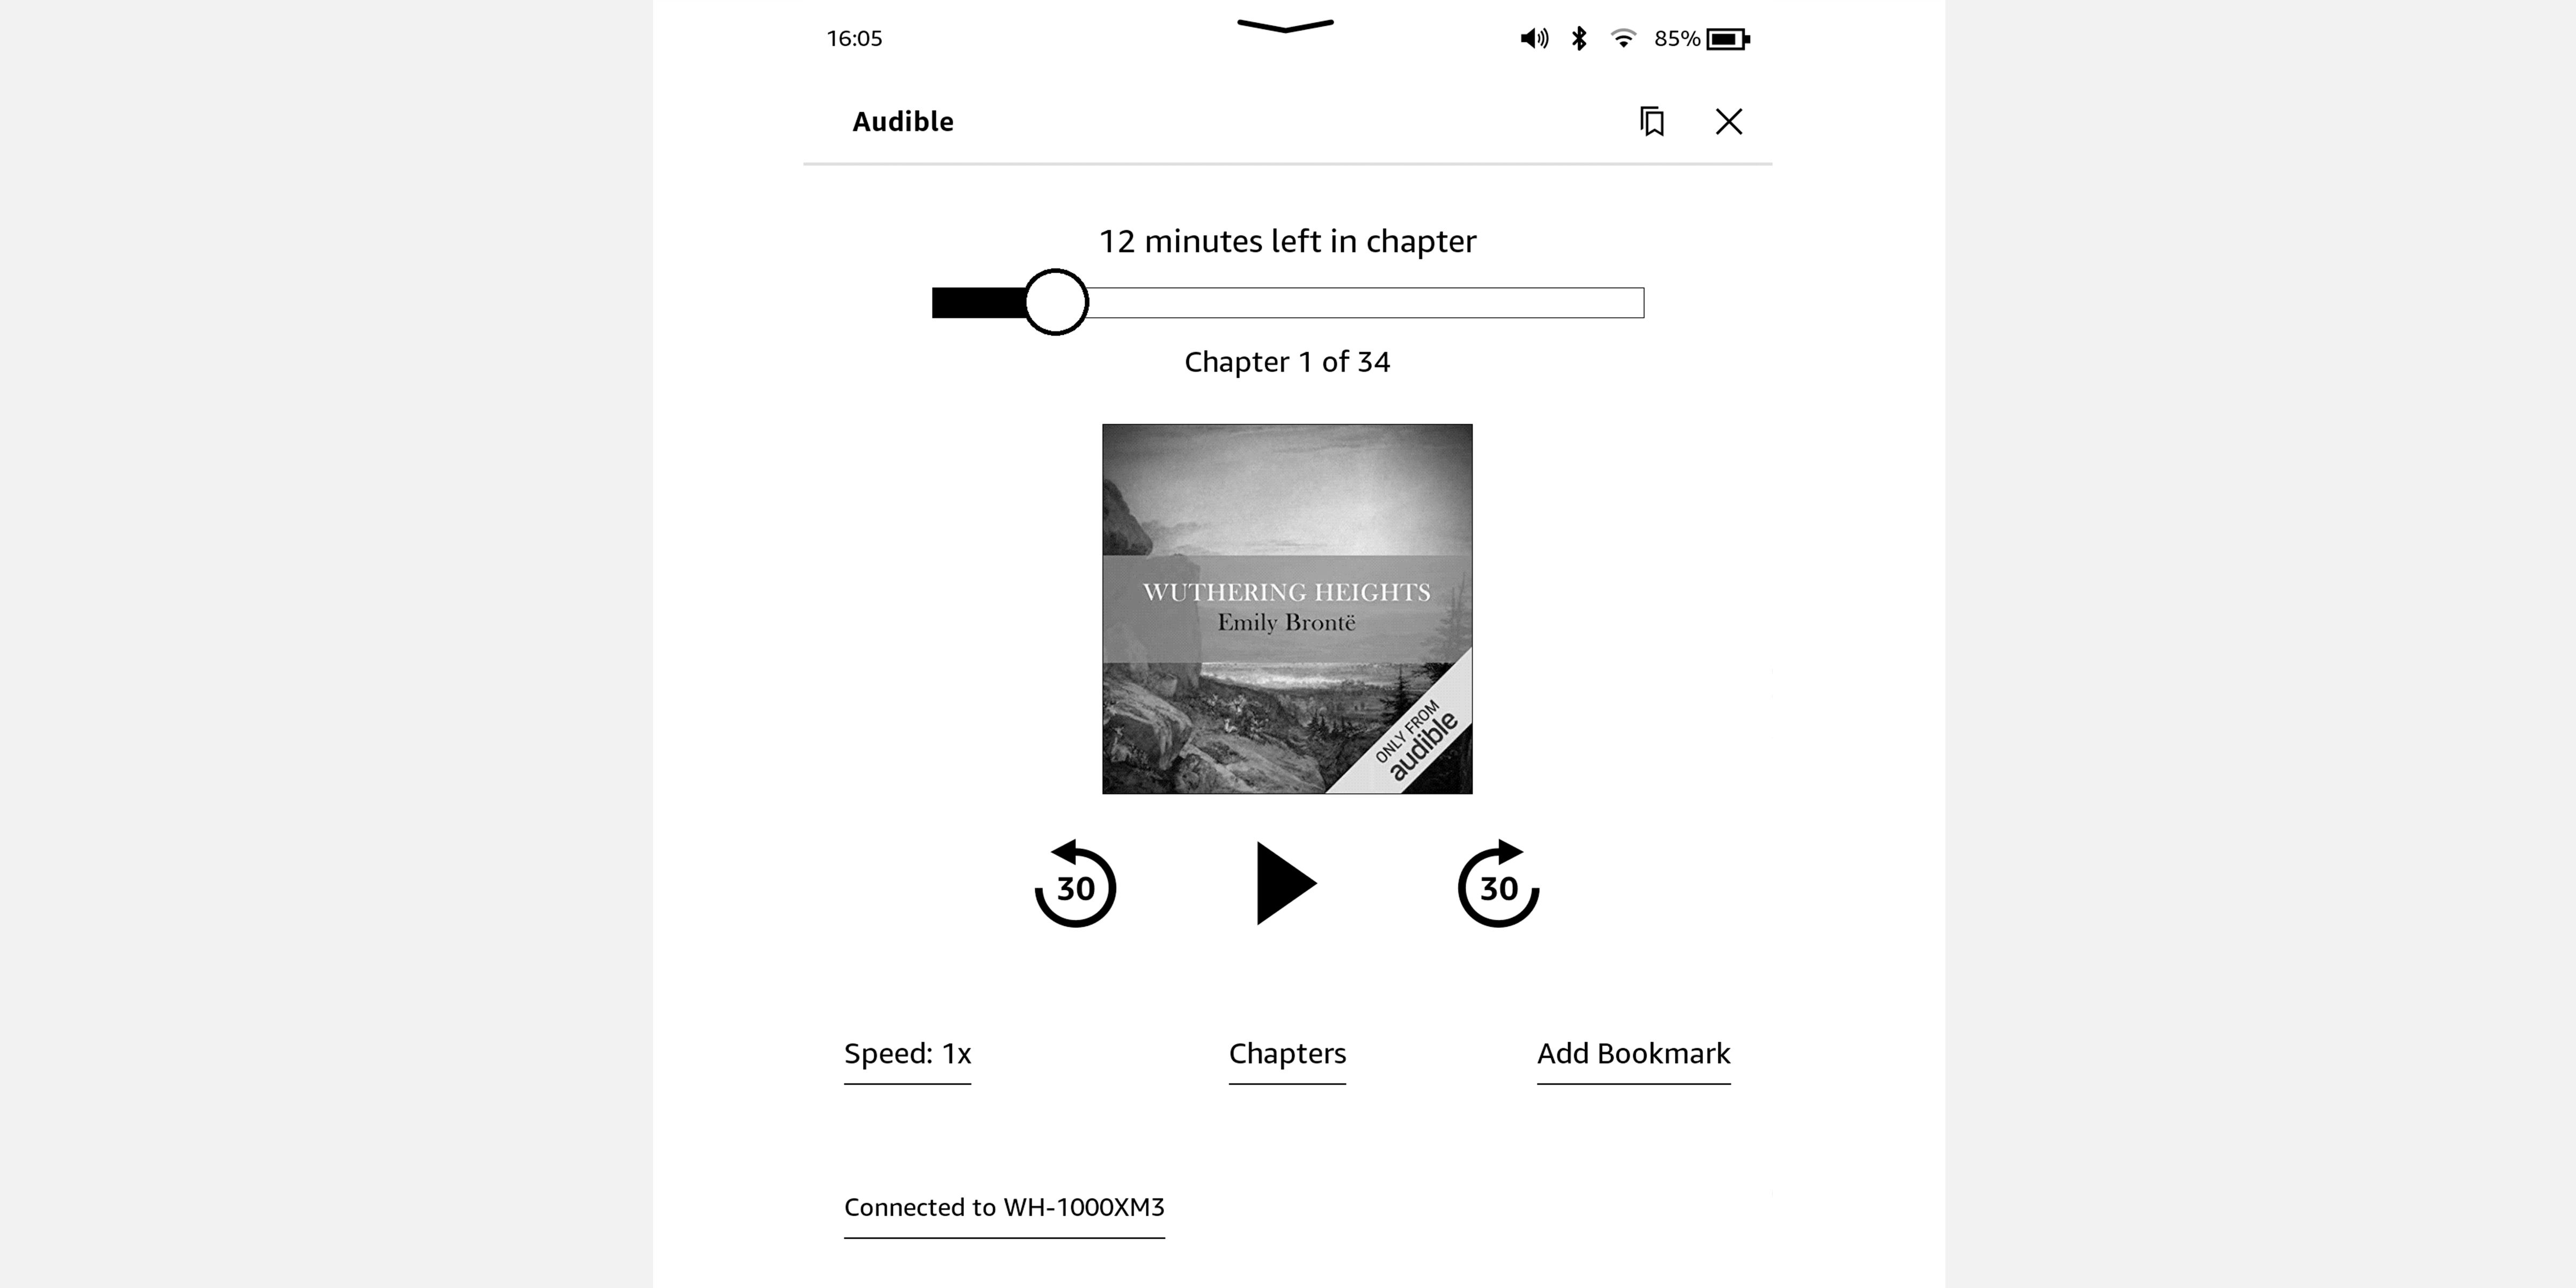 Screenshot of Kindle Oasis showing the Audible audiobook playback screen